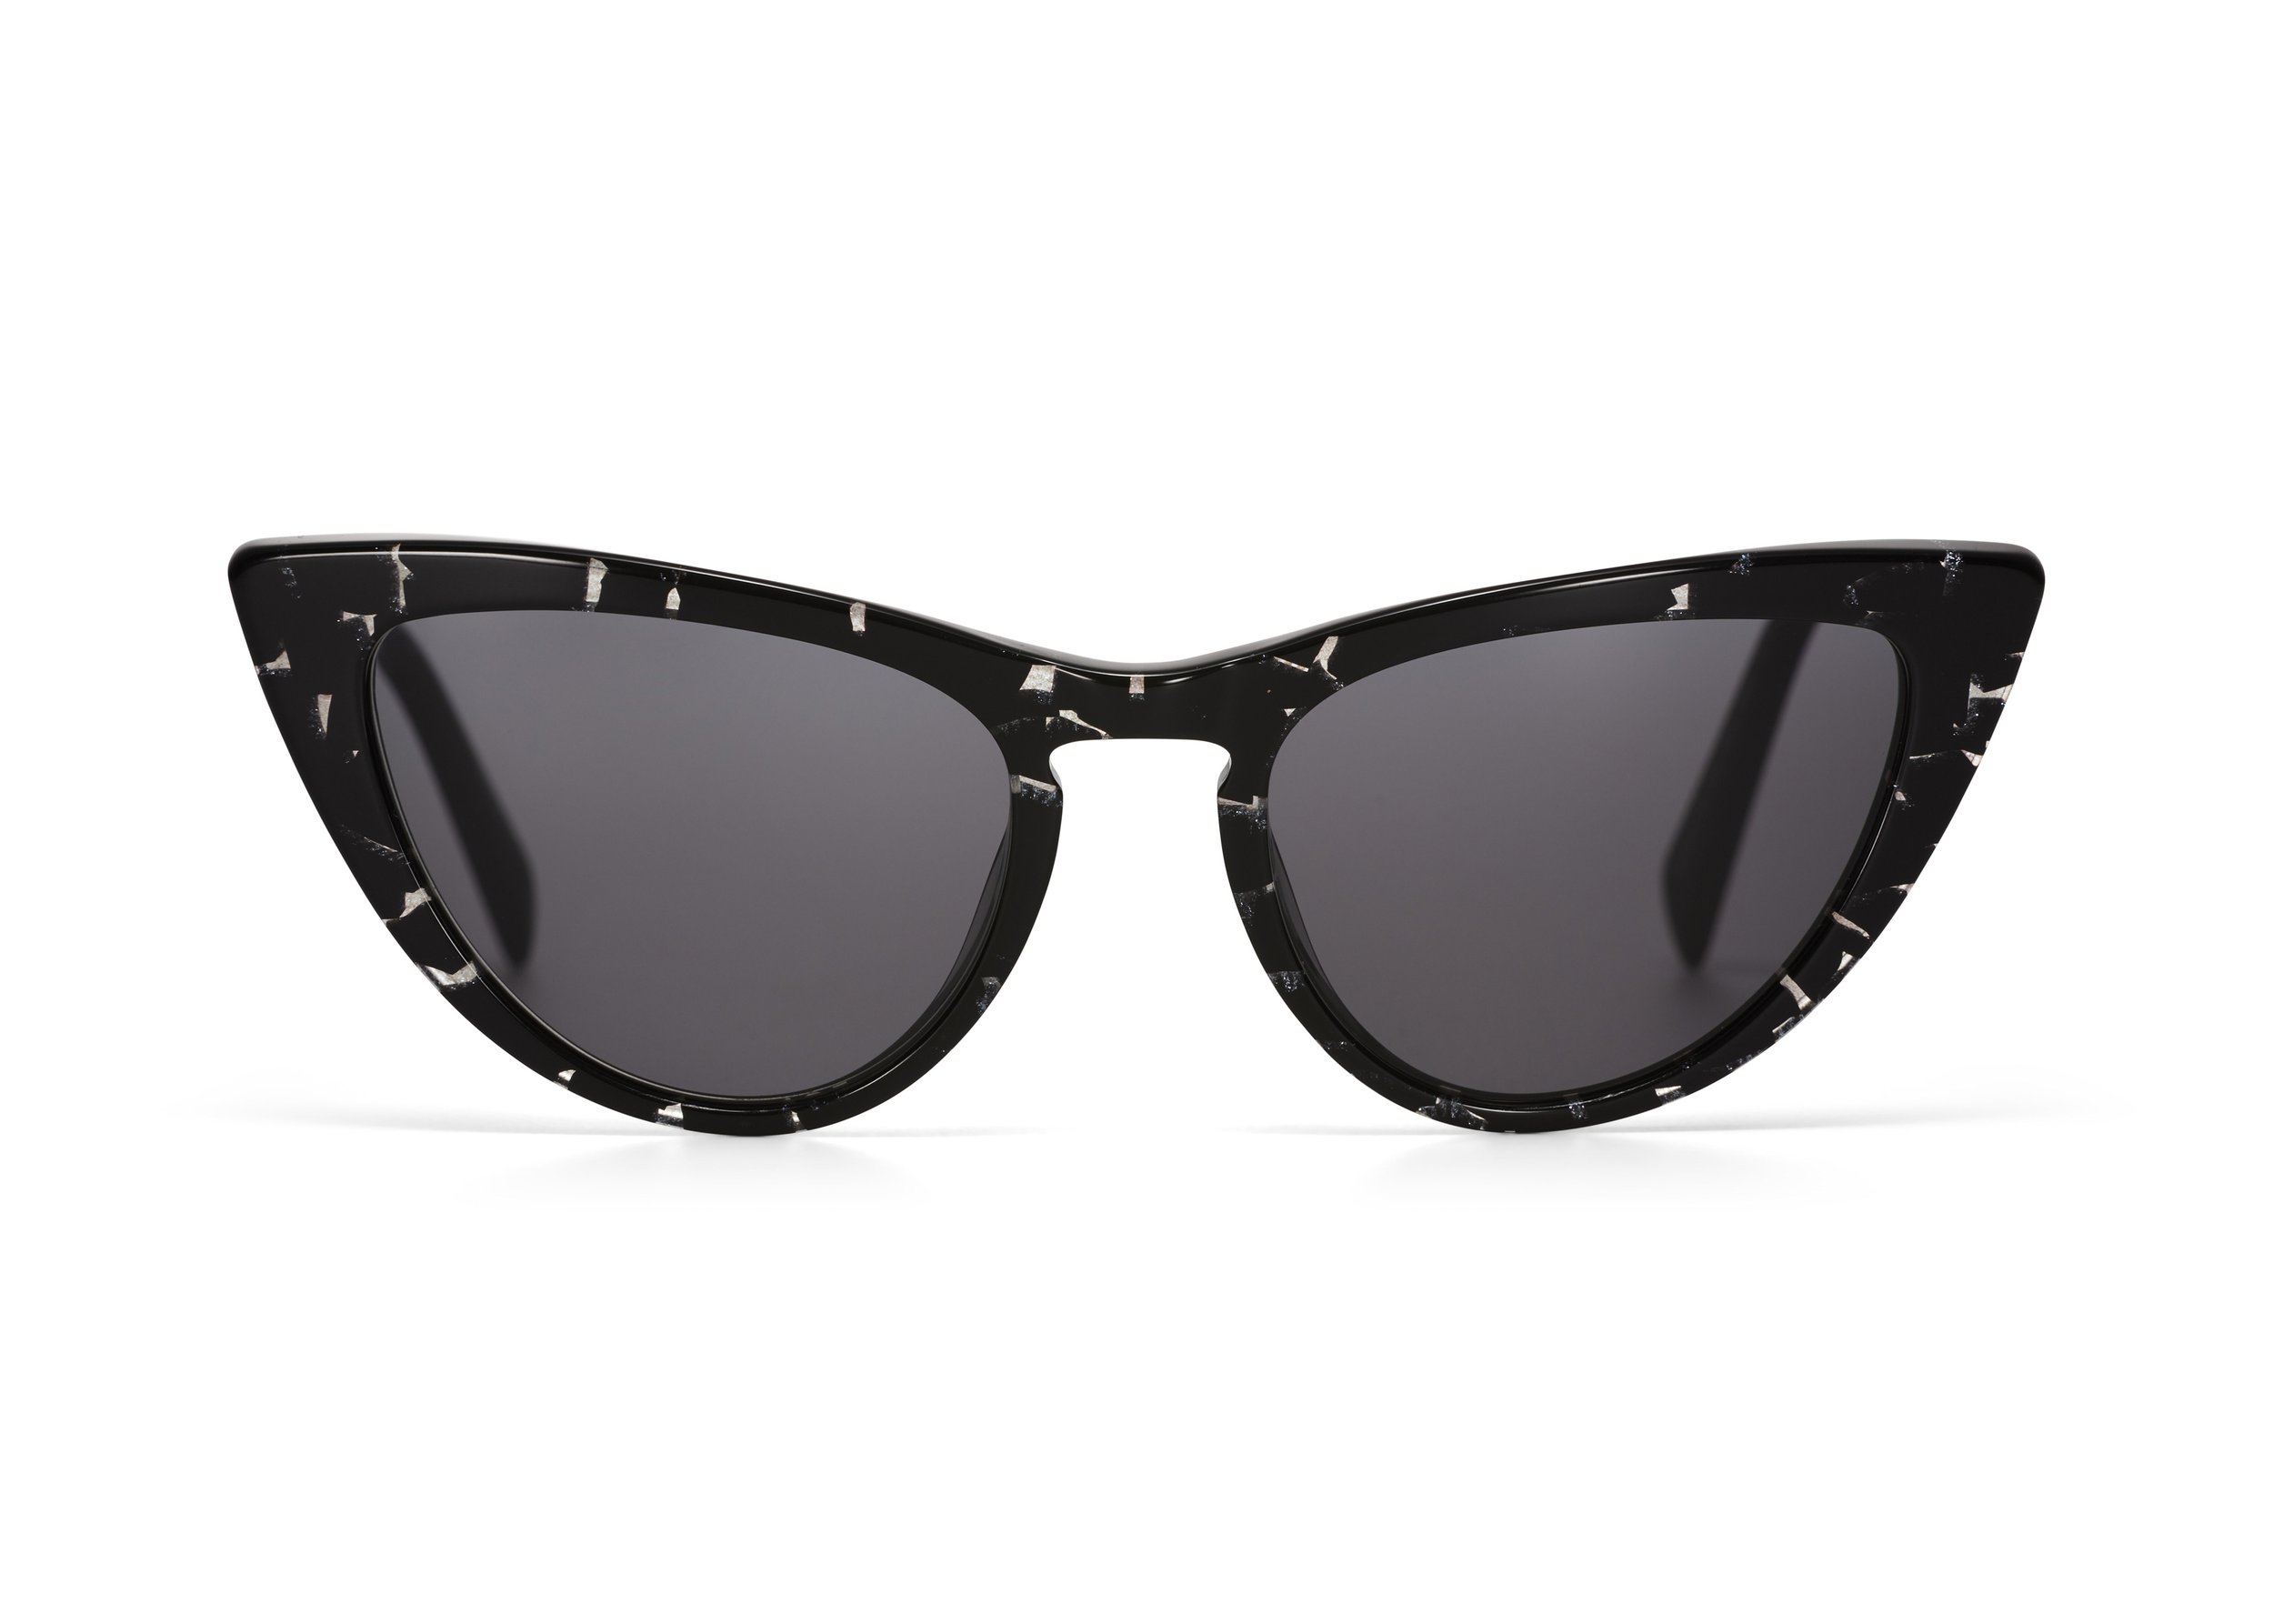 Kylie Minogue Sunglasses in Black €129,